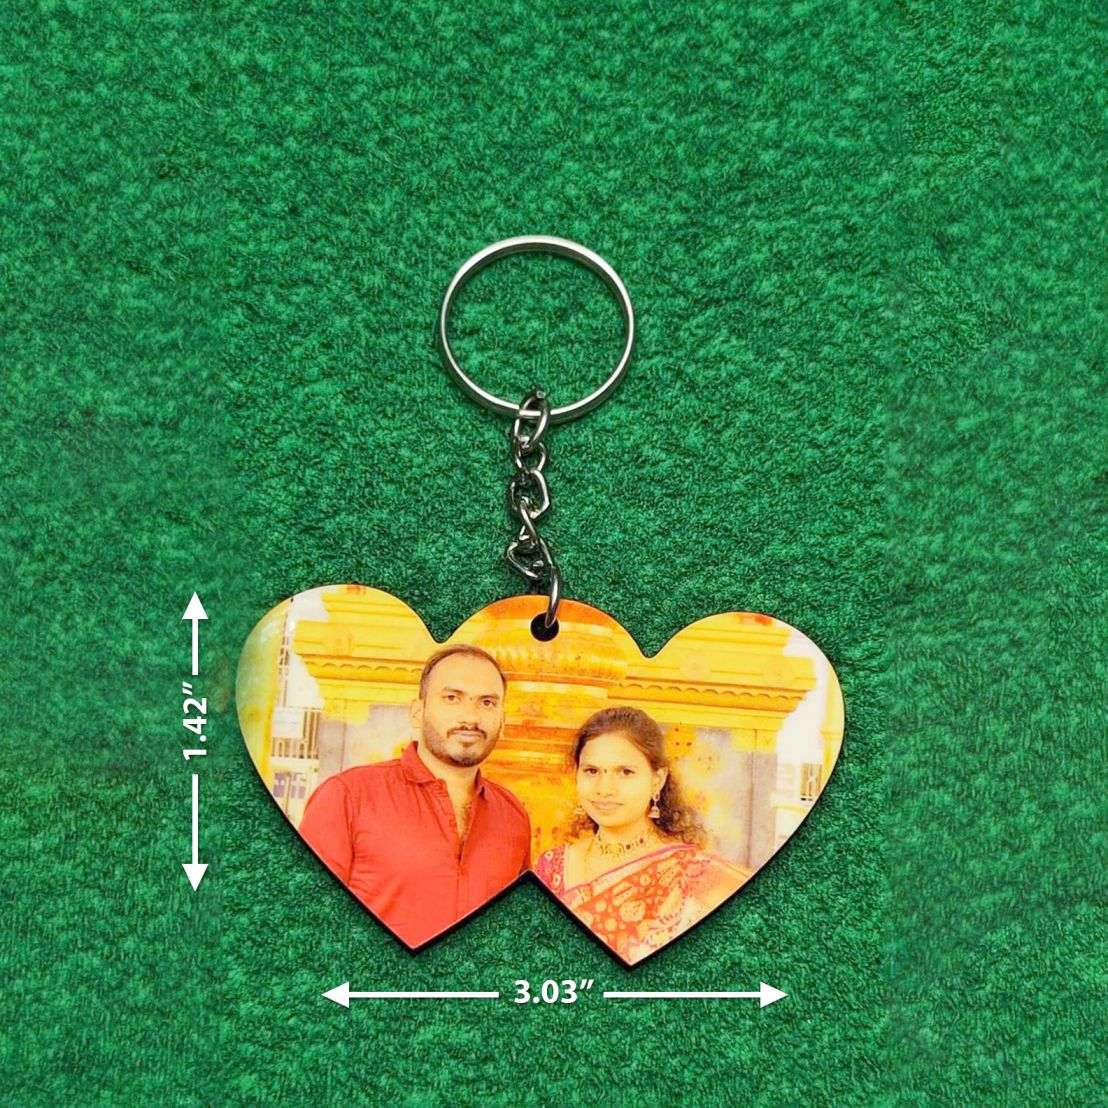 Custom Photo Printed Keychain – Double Heart Shape – Double the Love